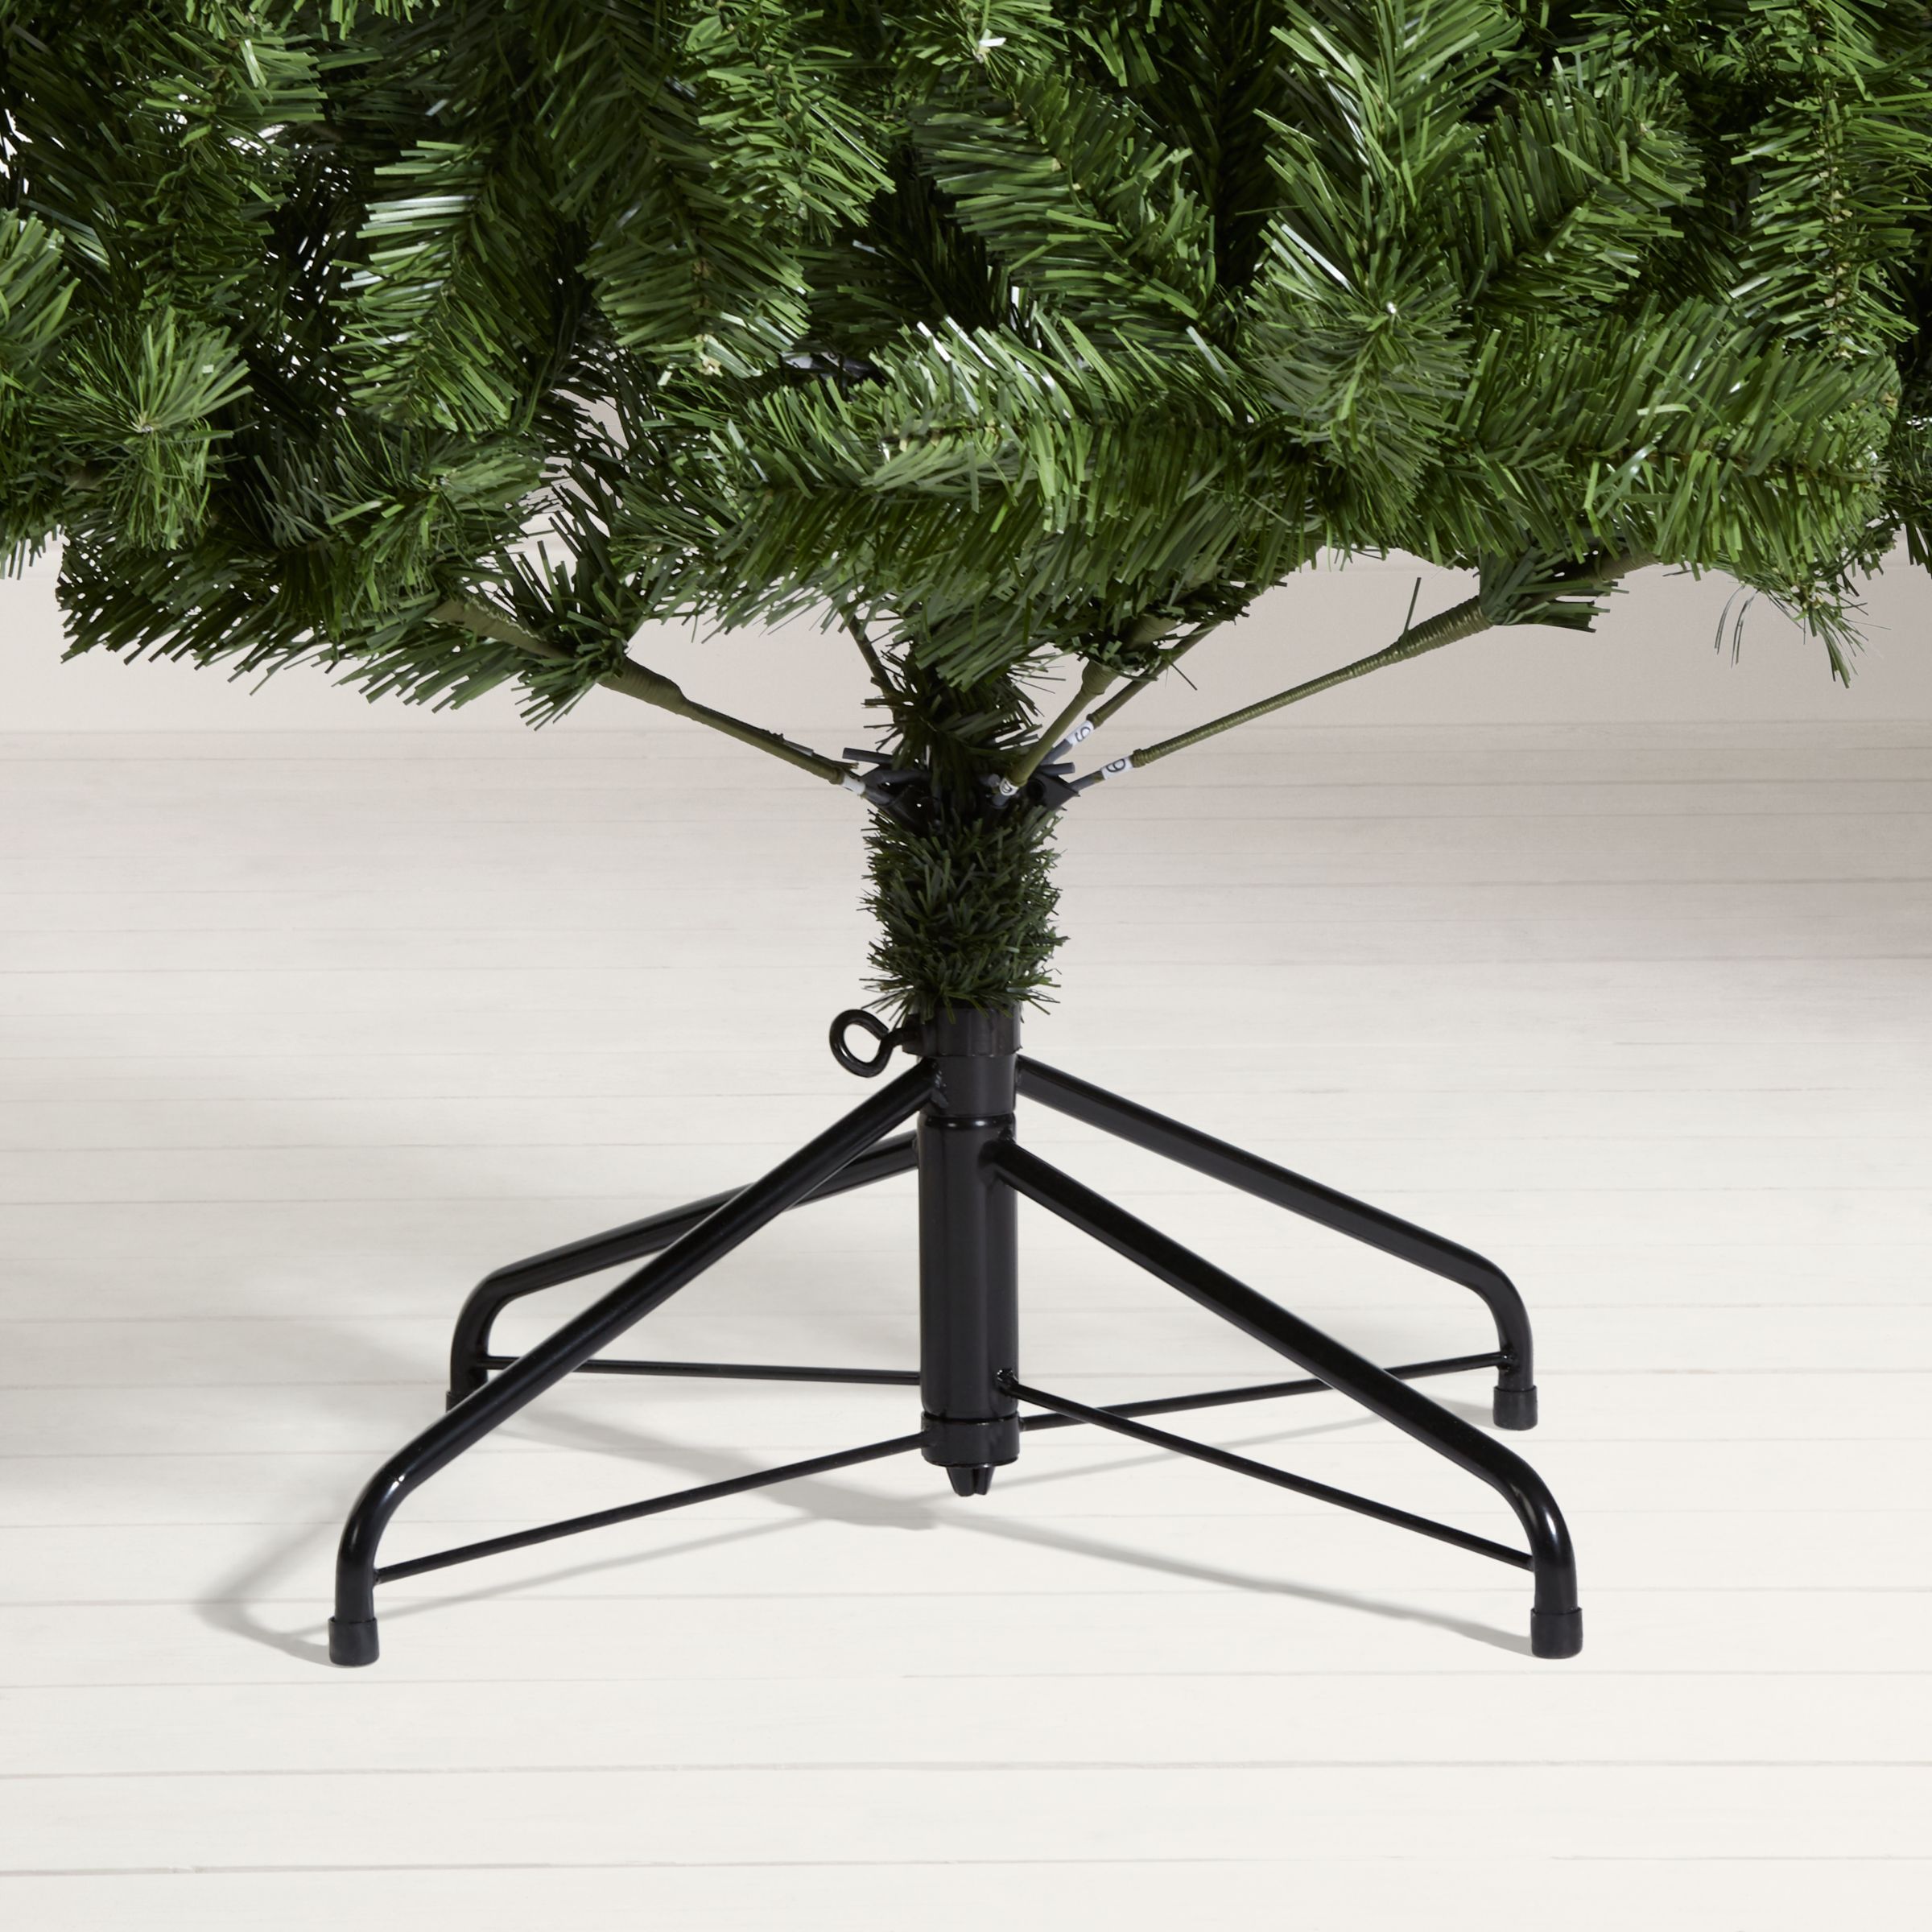 John Lewis & Partners The Basics Festive Fir Christmas Tree, 6ft